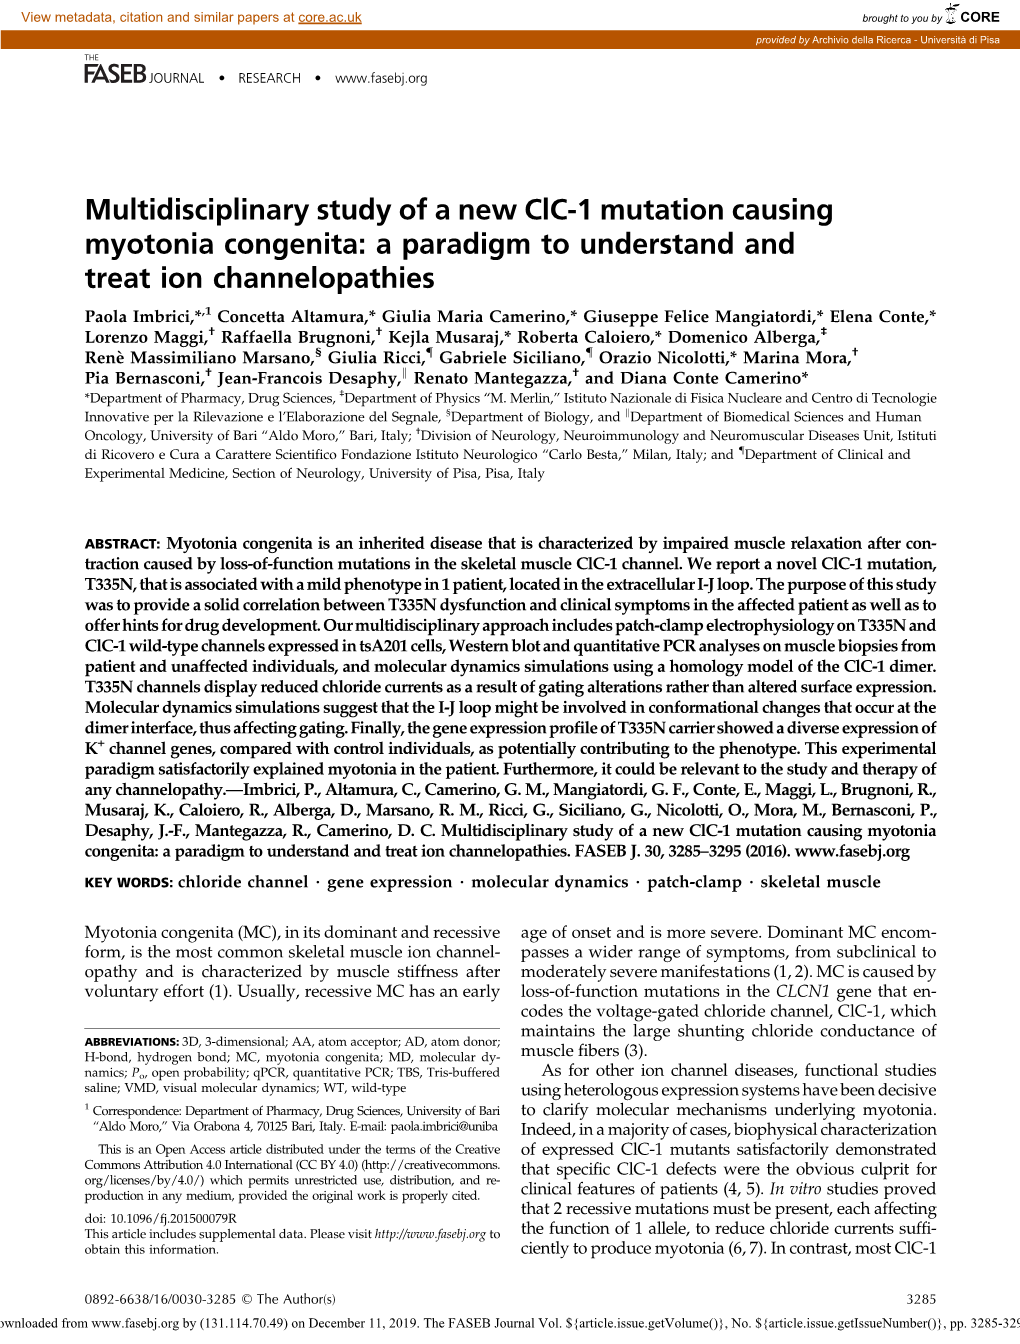 Multidisciplinary Study of a New Clc-1 Mutation Causing Myotonia Congenita